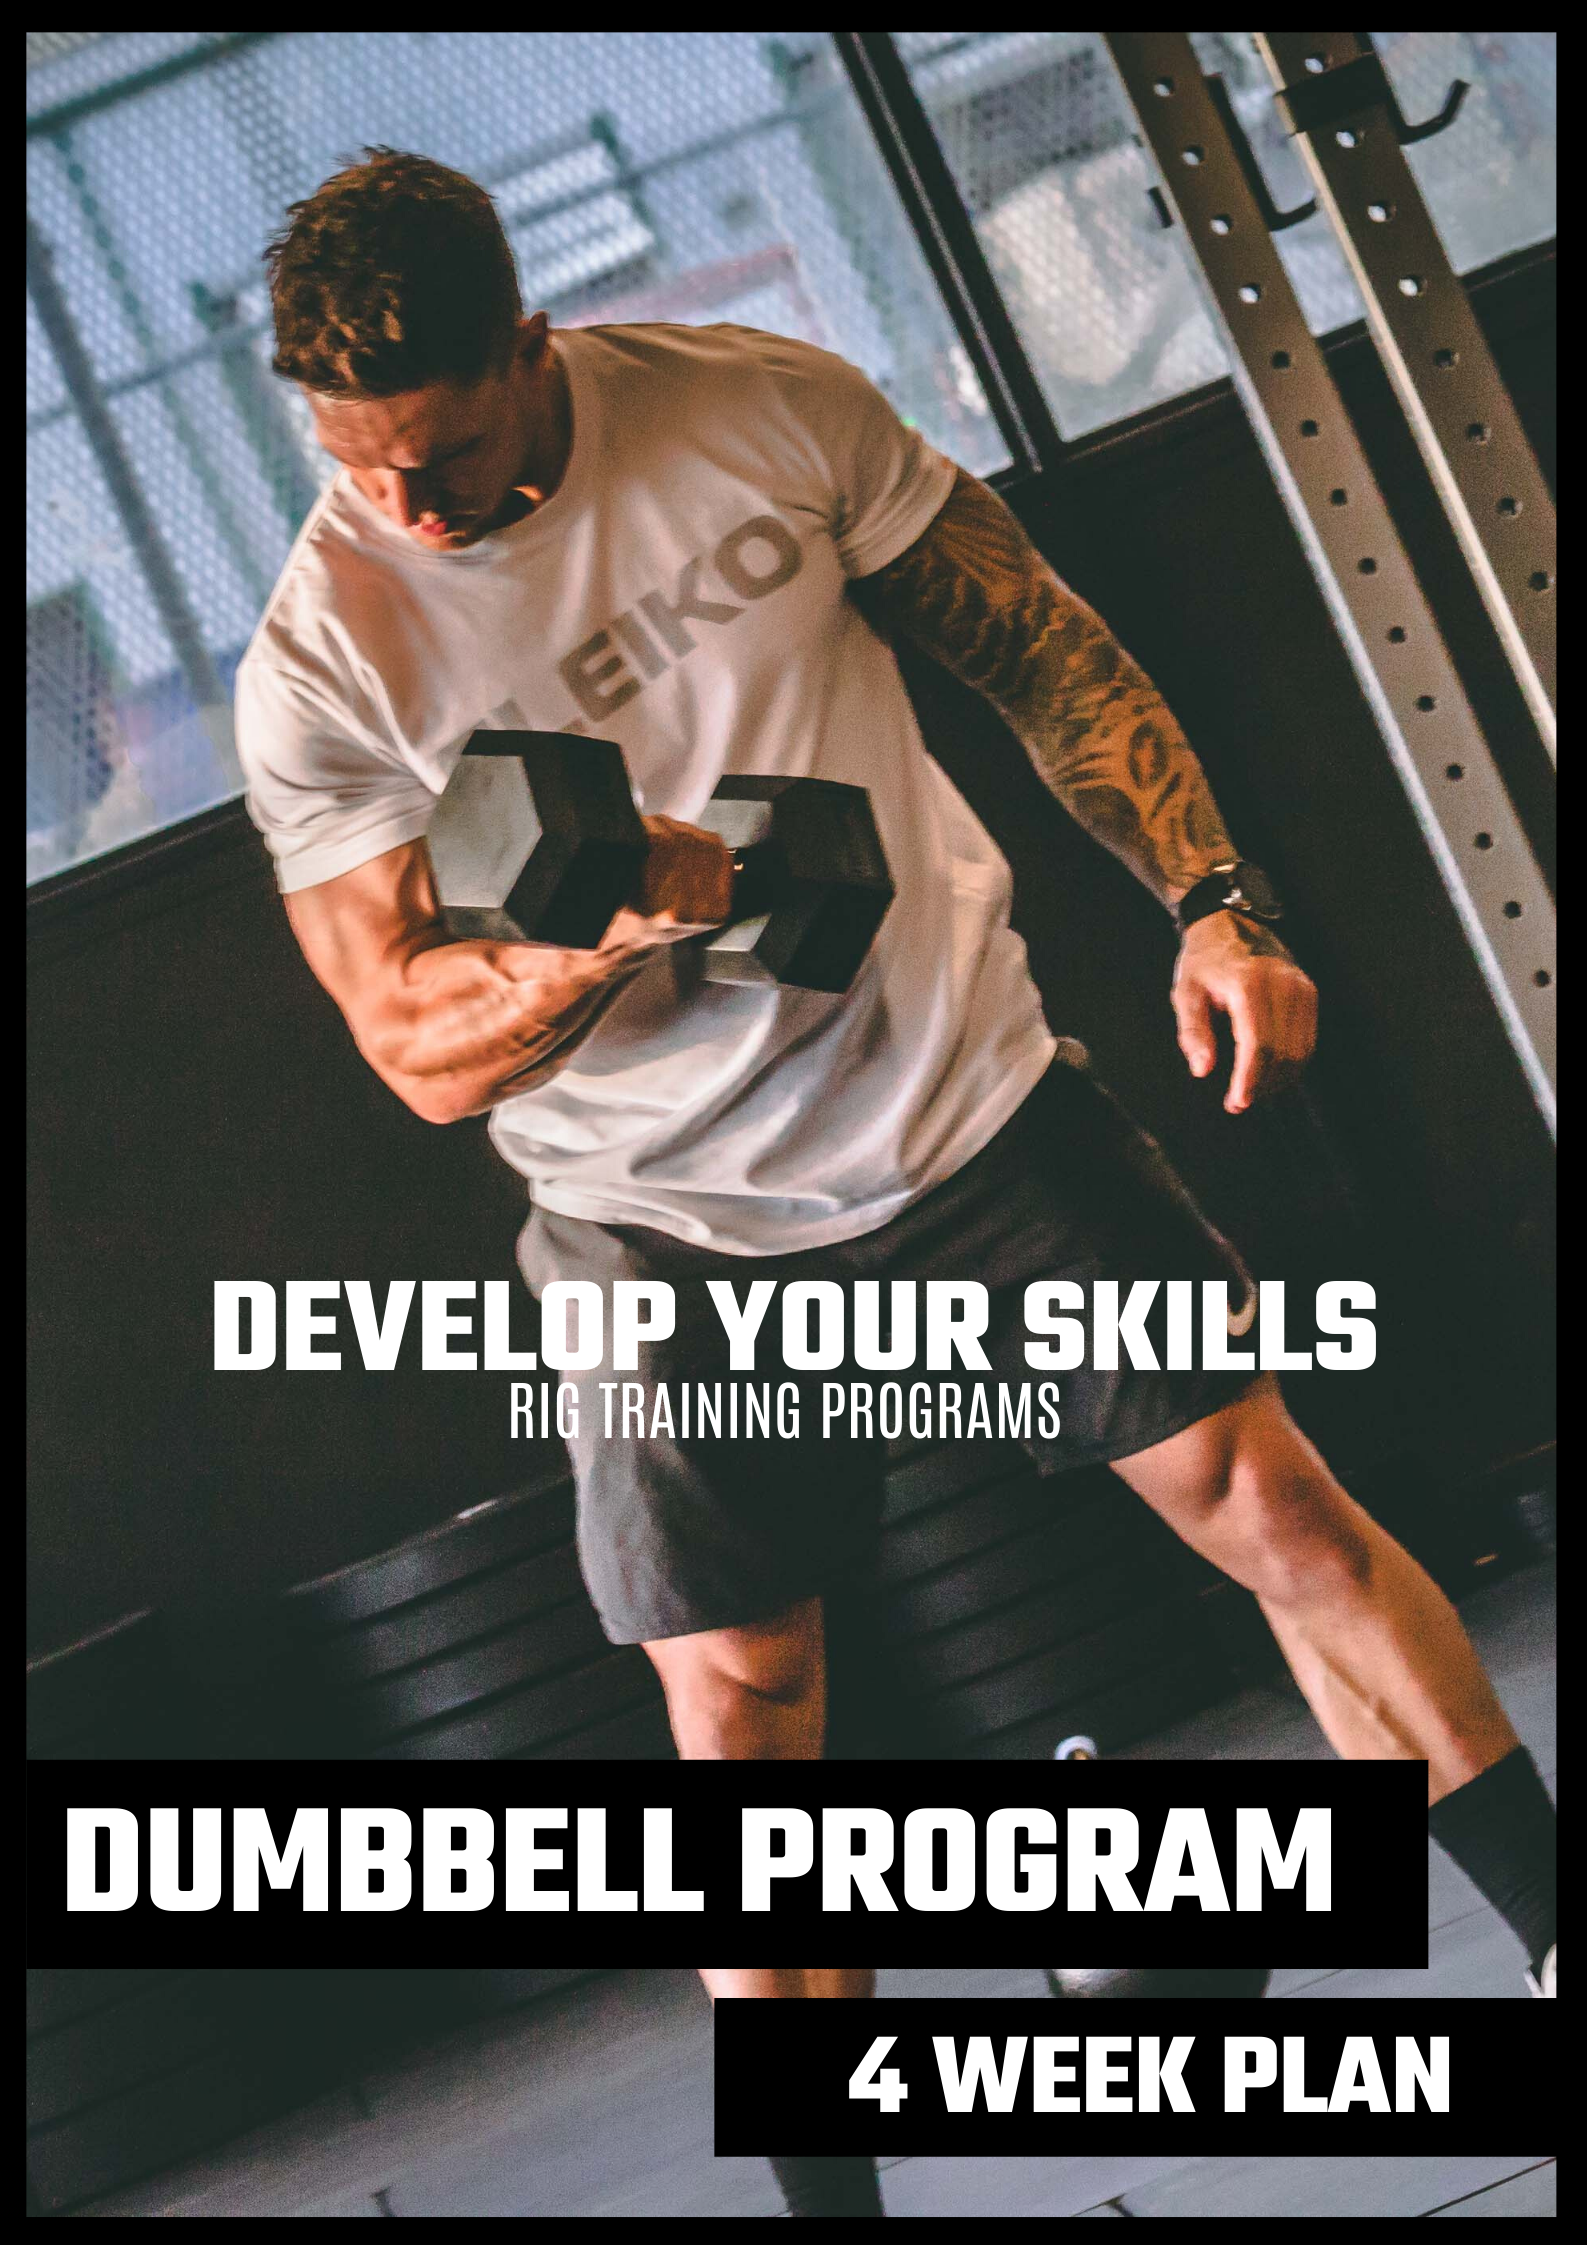 Dumbbell Program - 4 Week Plan - Rig Training Programs